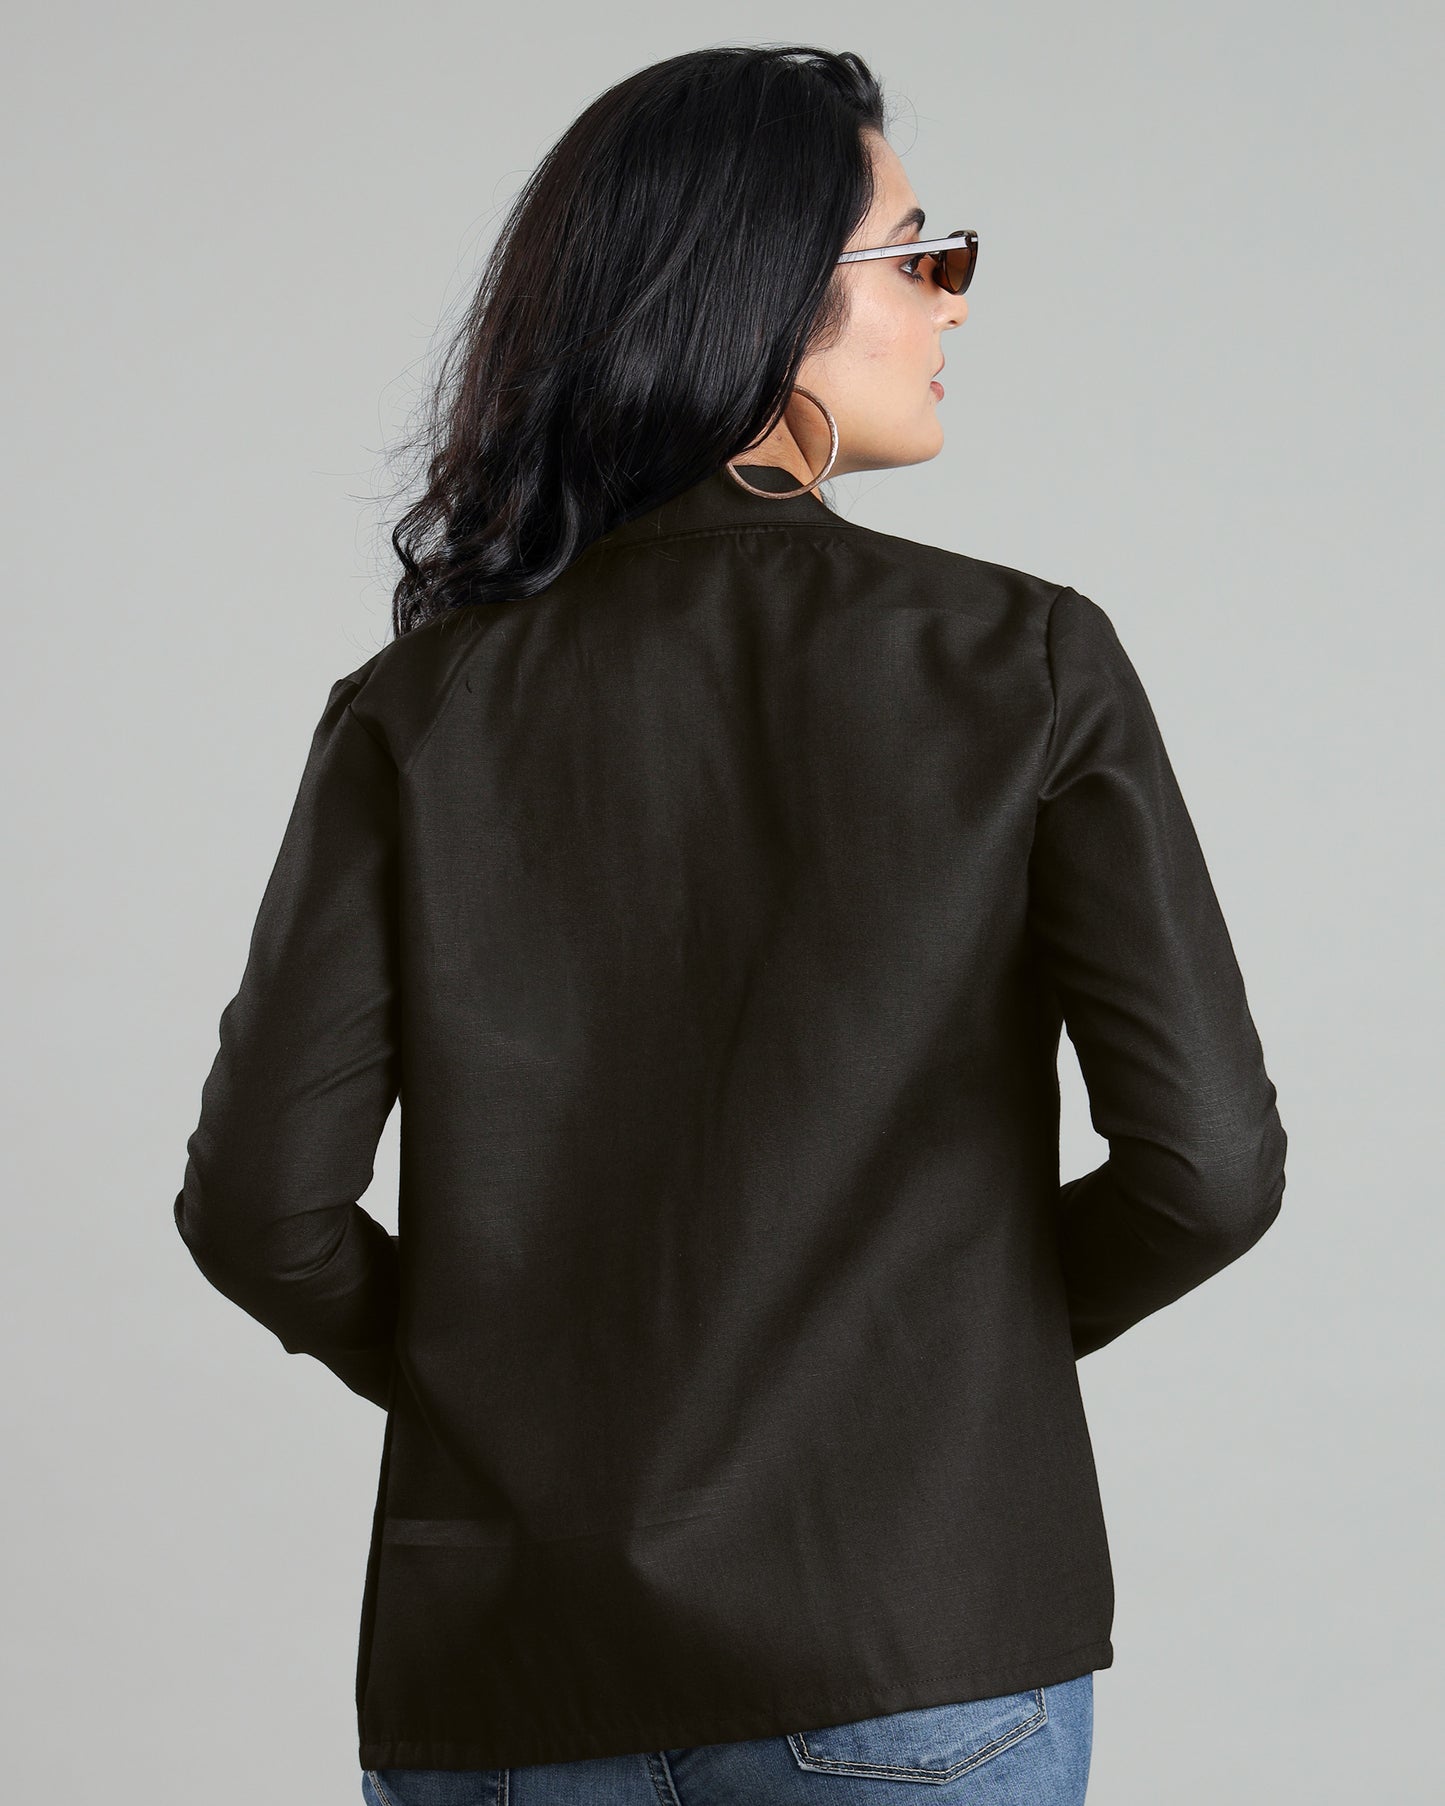 Tailored Sophistication: Women's Jacket